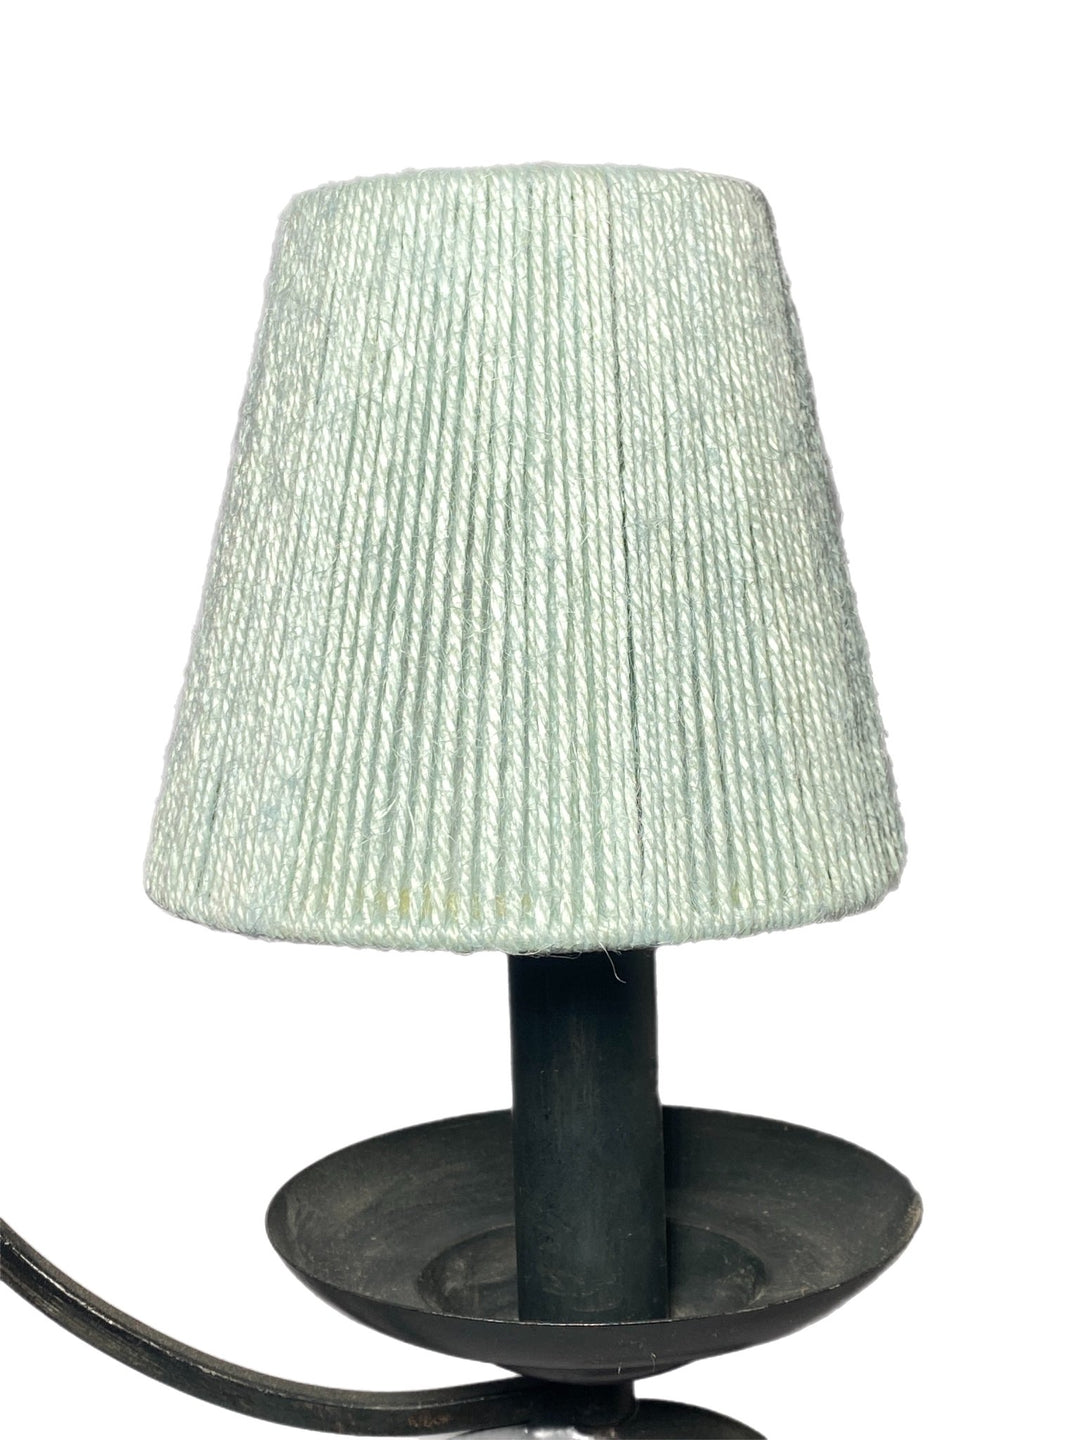 5" Aviary Blue Jute String Empire Lamp shade - Lux Lamp Shades